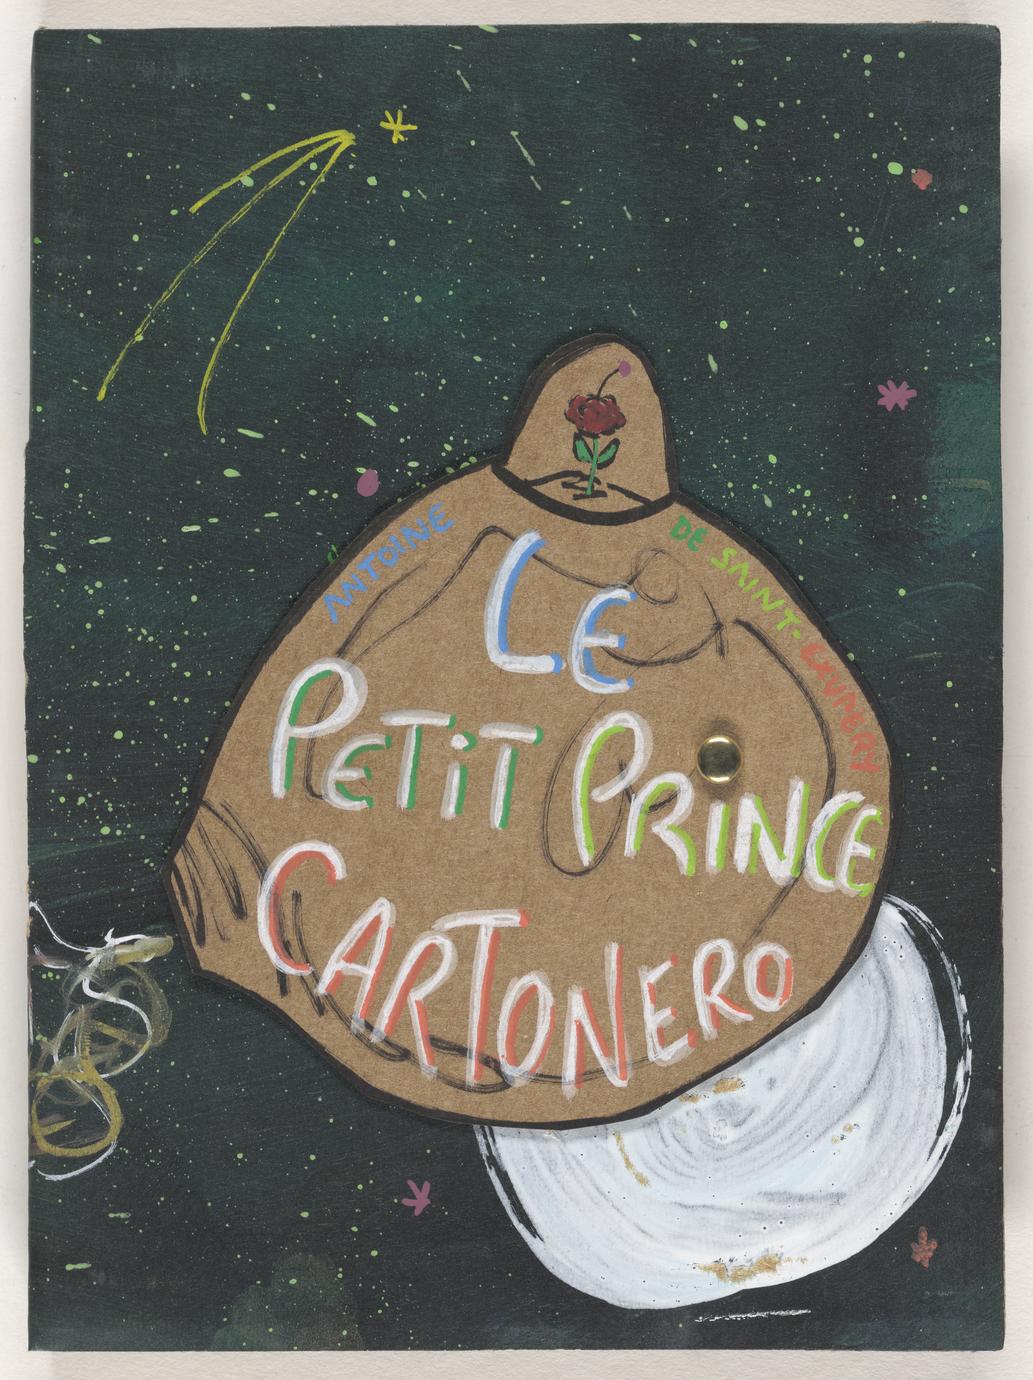 Le Petit Prince (1 of 3)